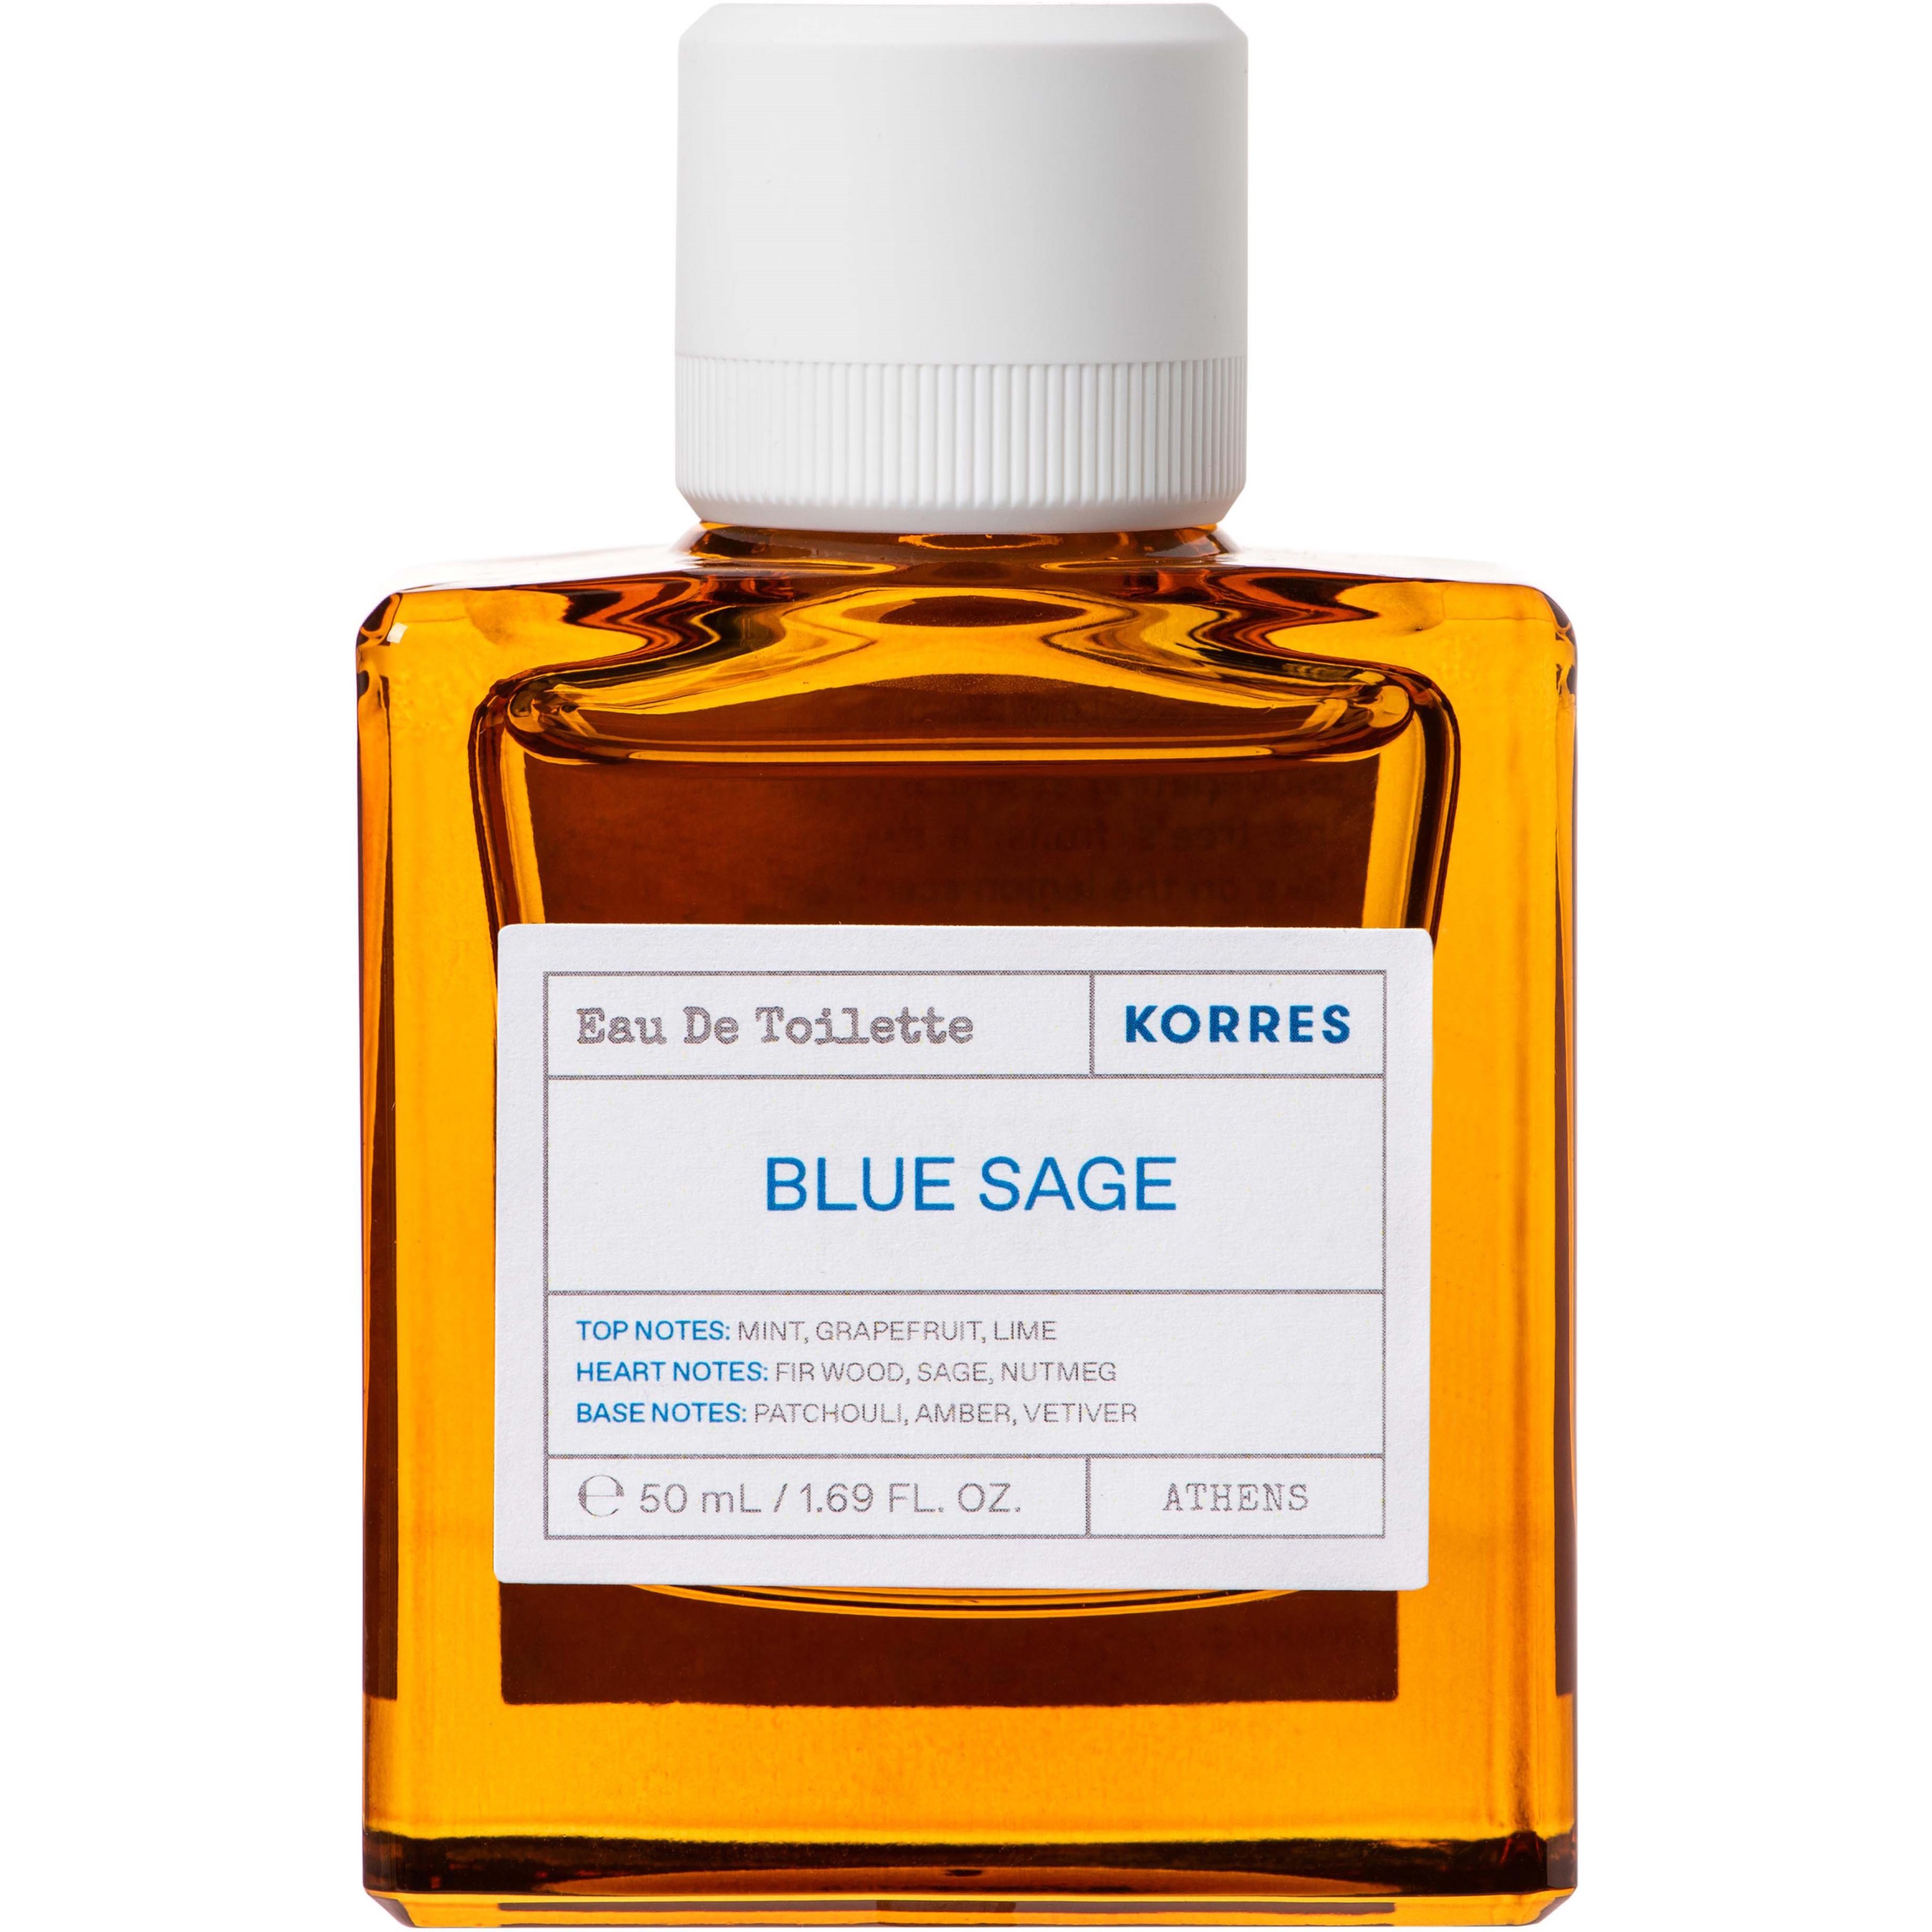 Zdjęcia - Perfuma damska Korres Blue Sage Eau de Toilette 50 ml 